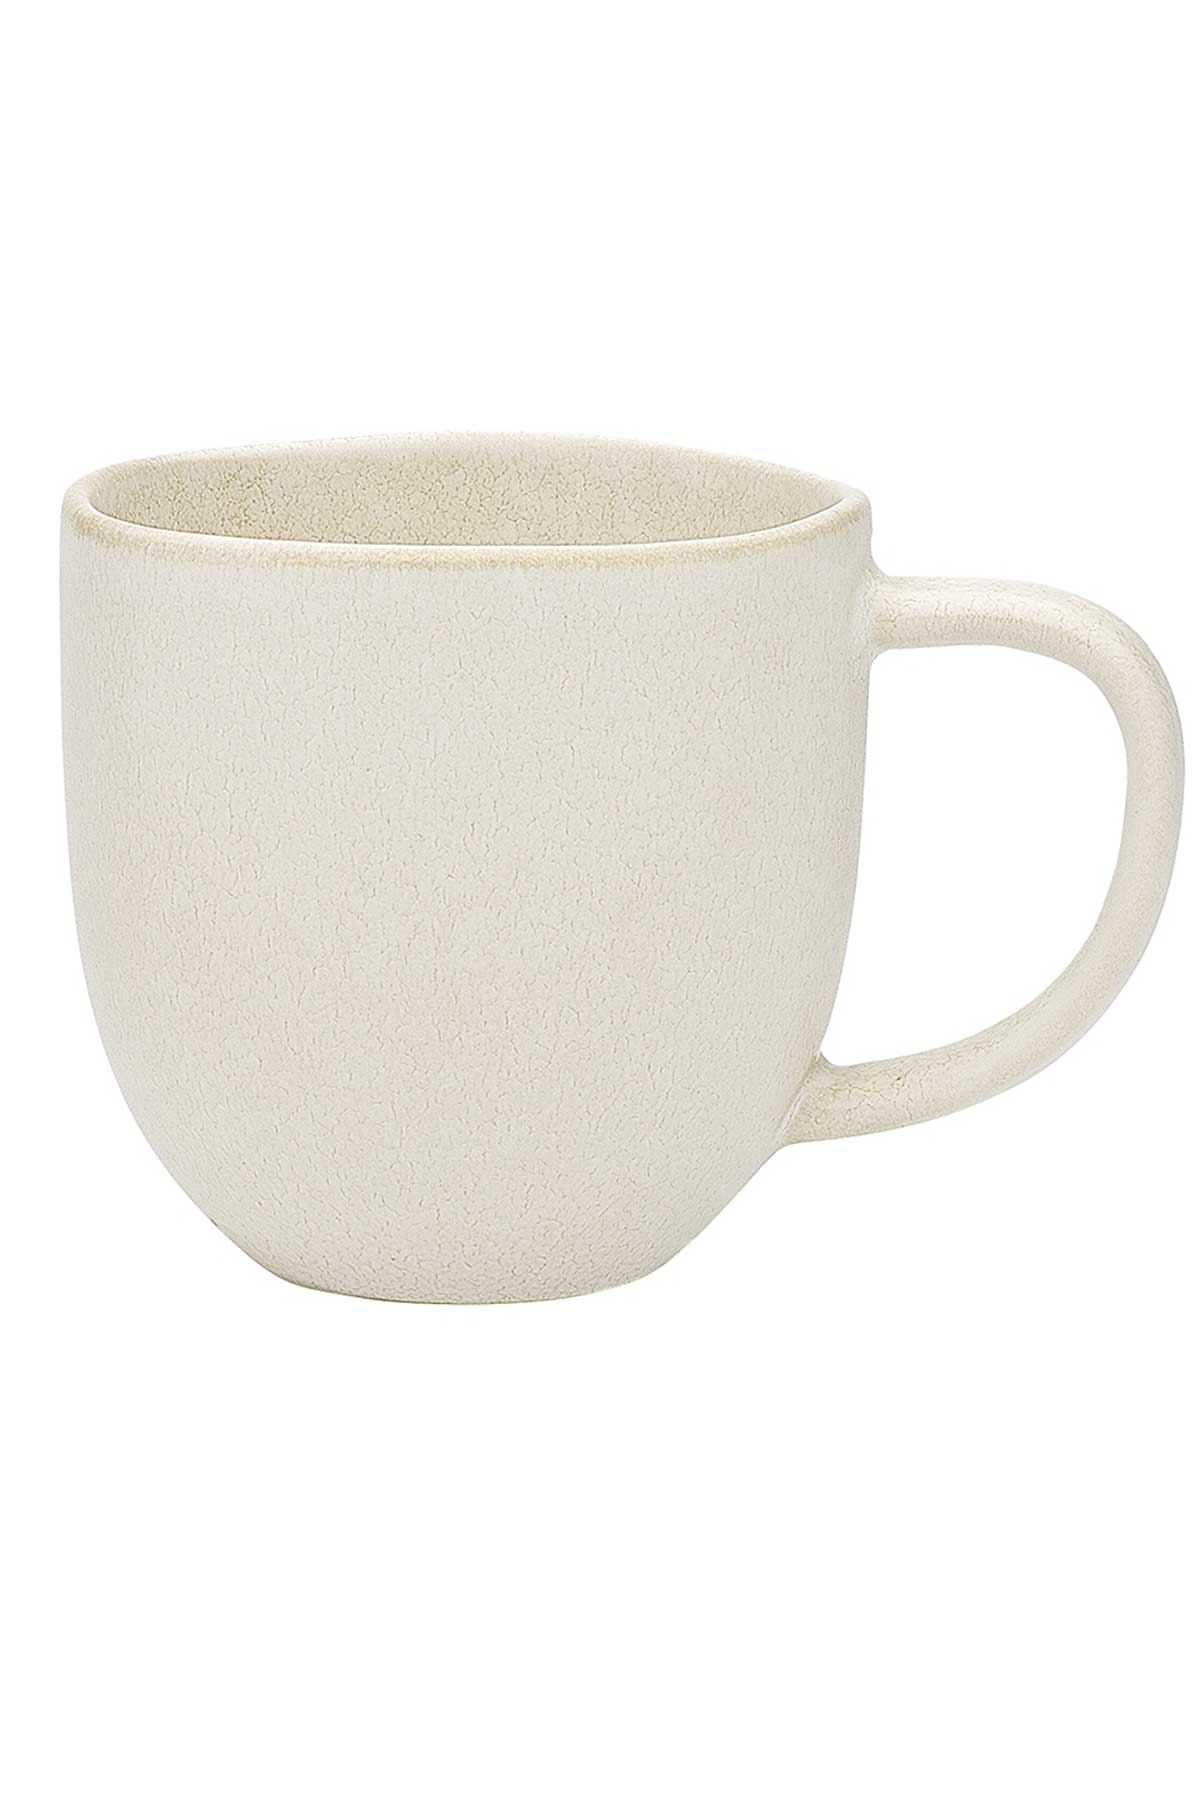 dwell mug in linen